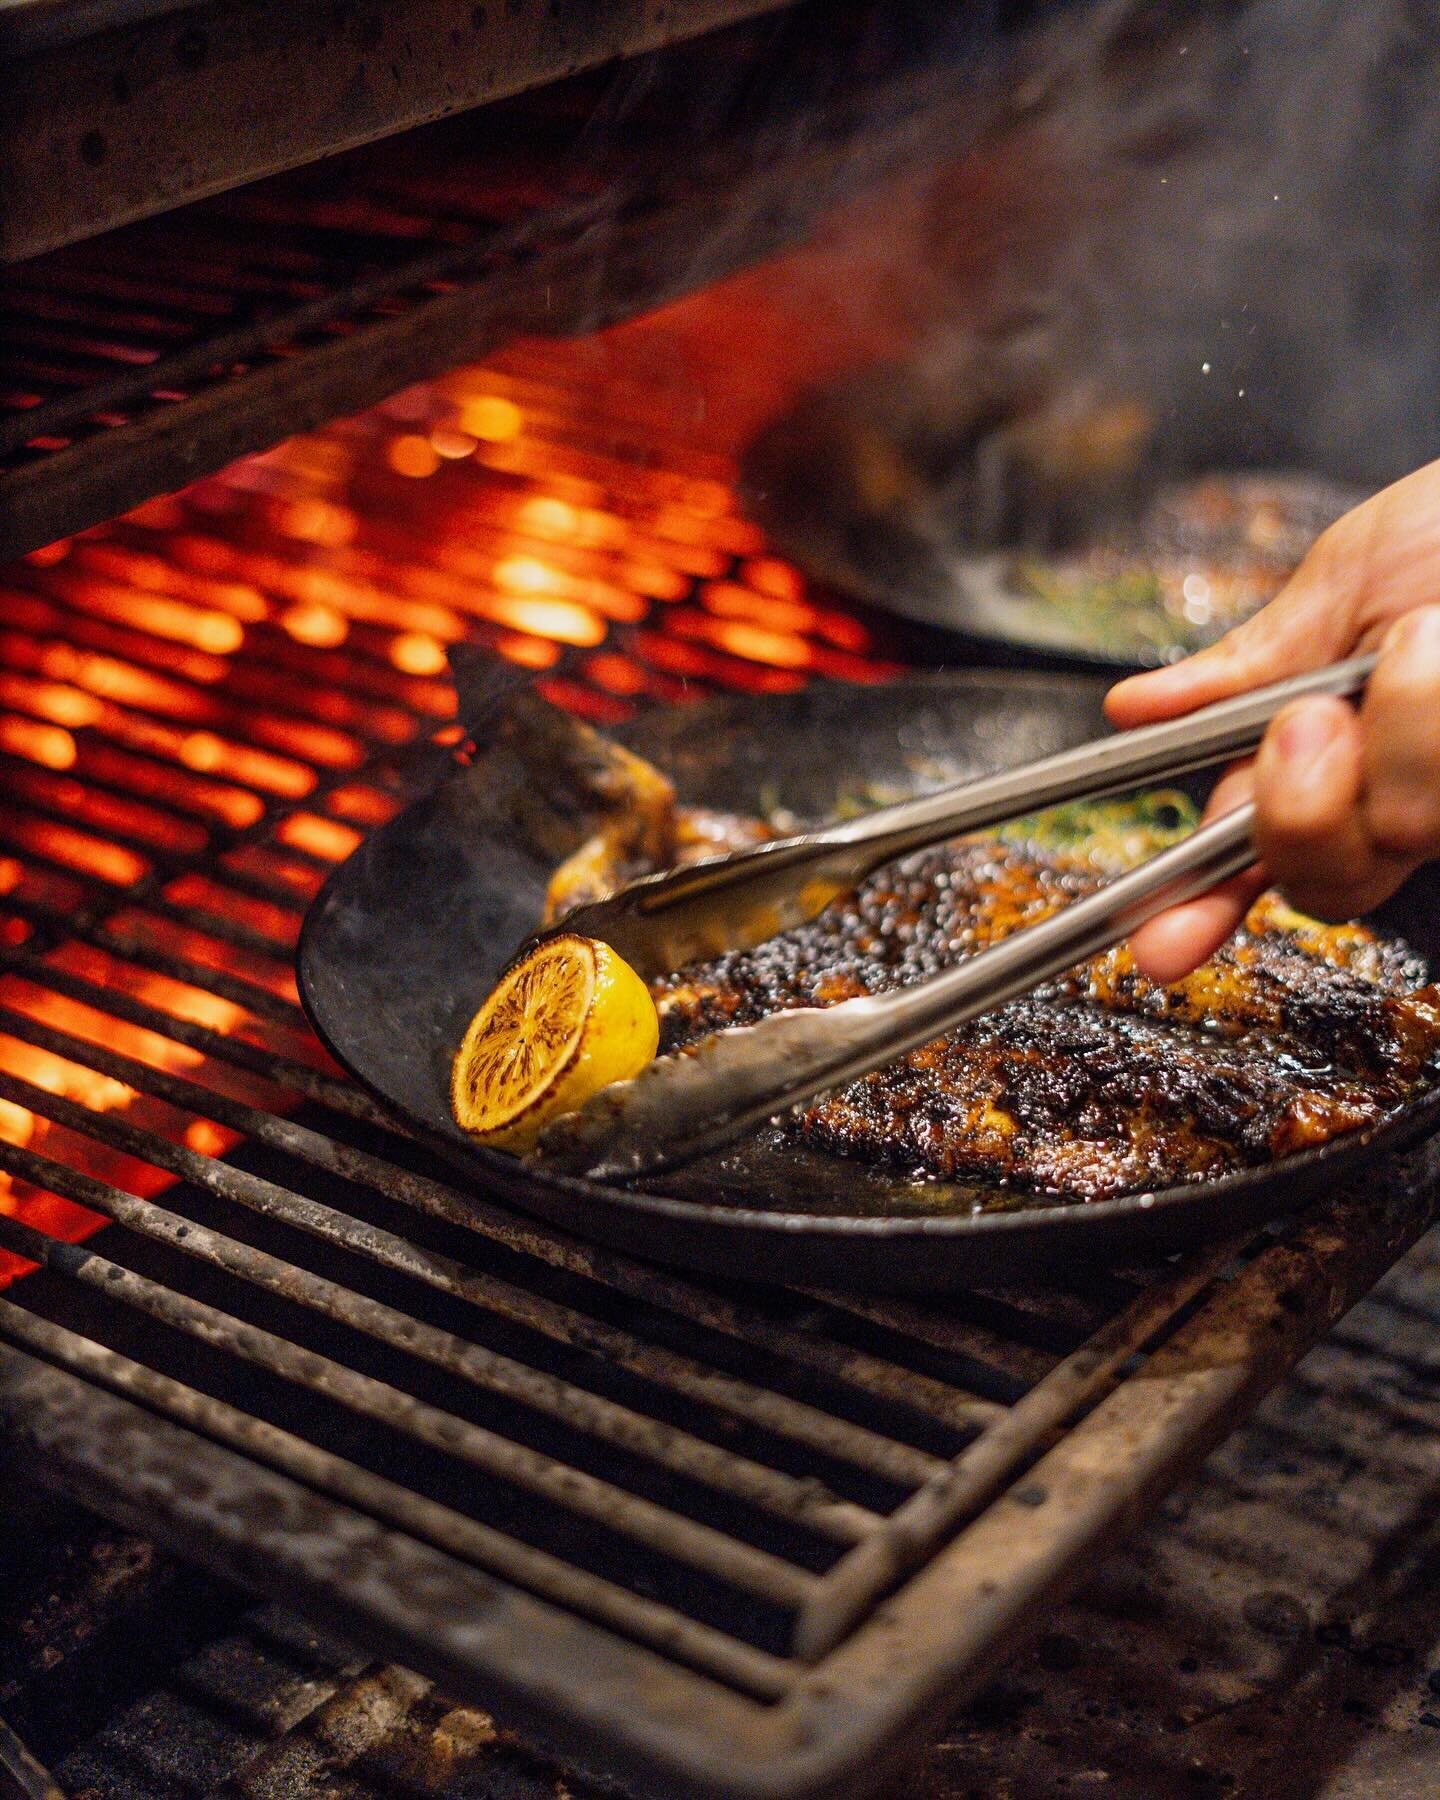 fresh and seasonal ingredients 🍋

#lafoodie #mexicancuisine #restaurants